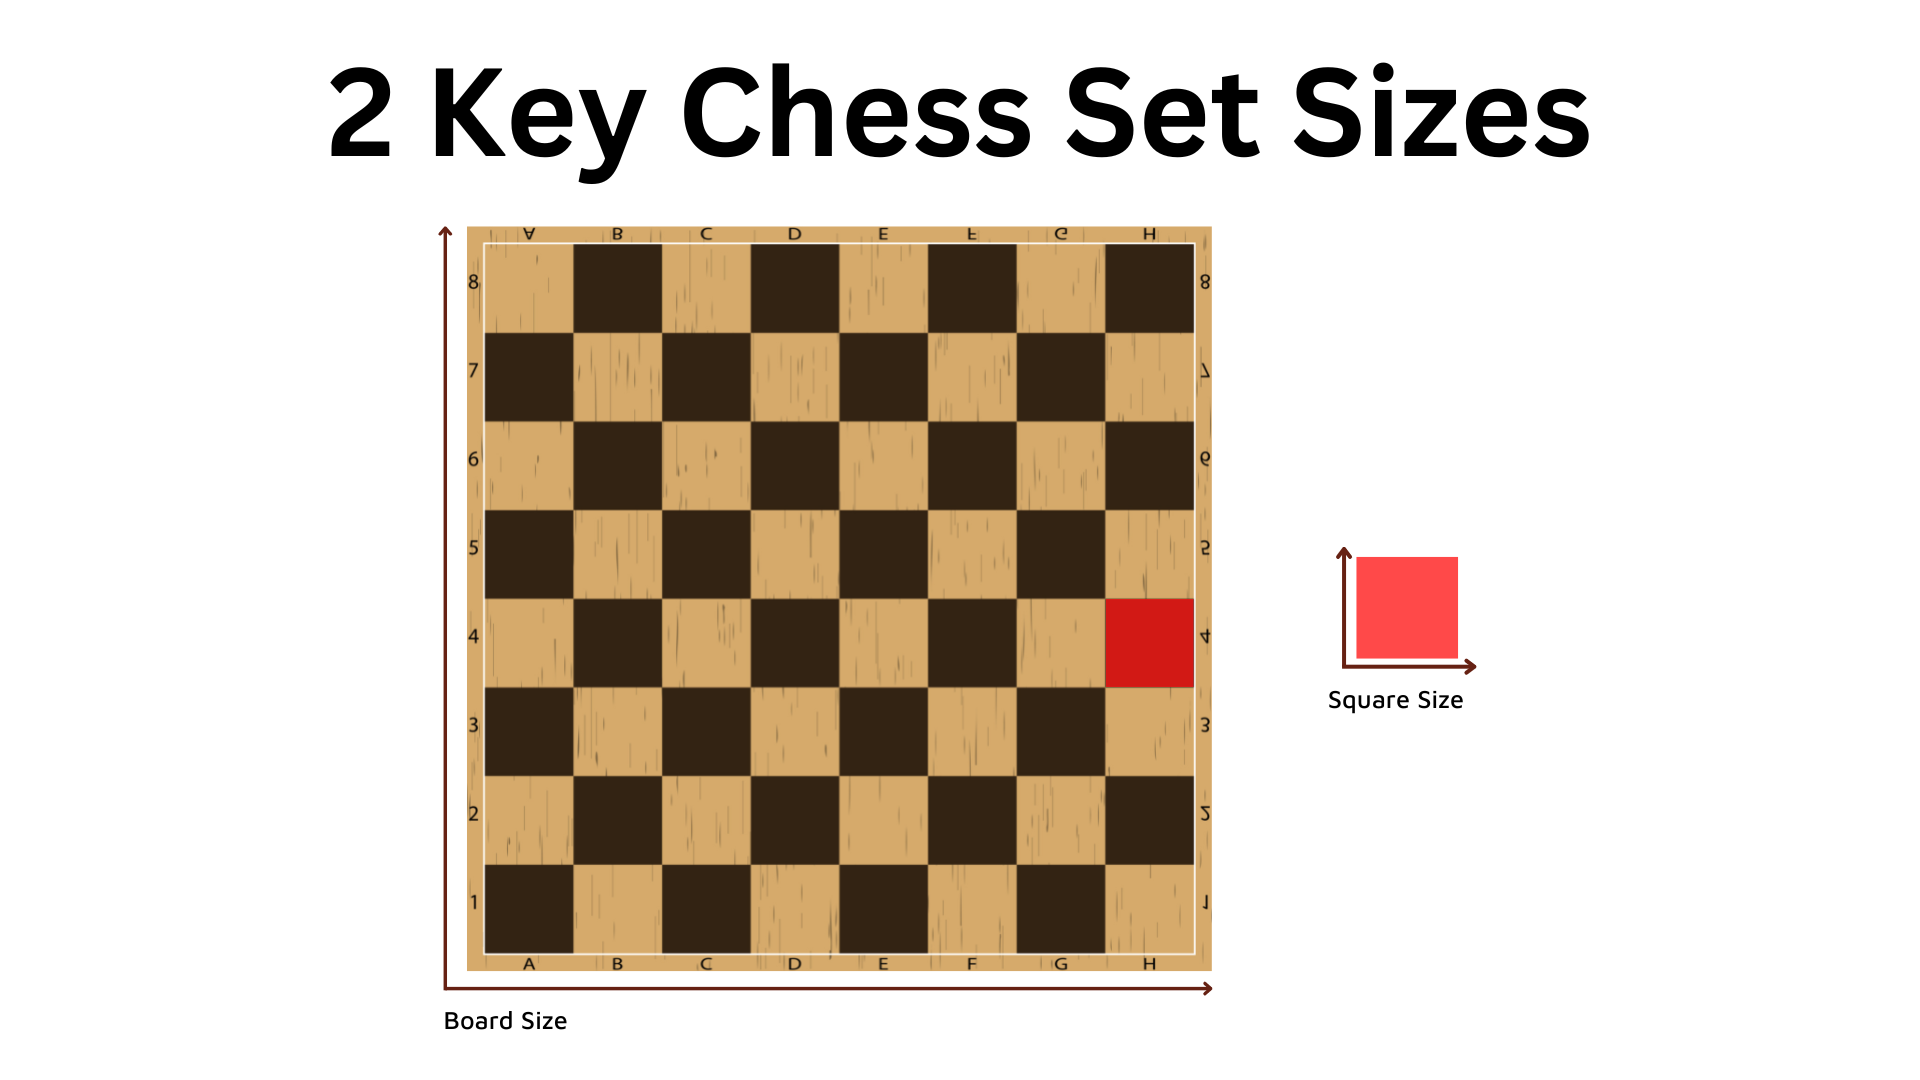 2 key chess set sizes